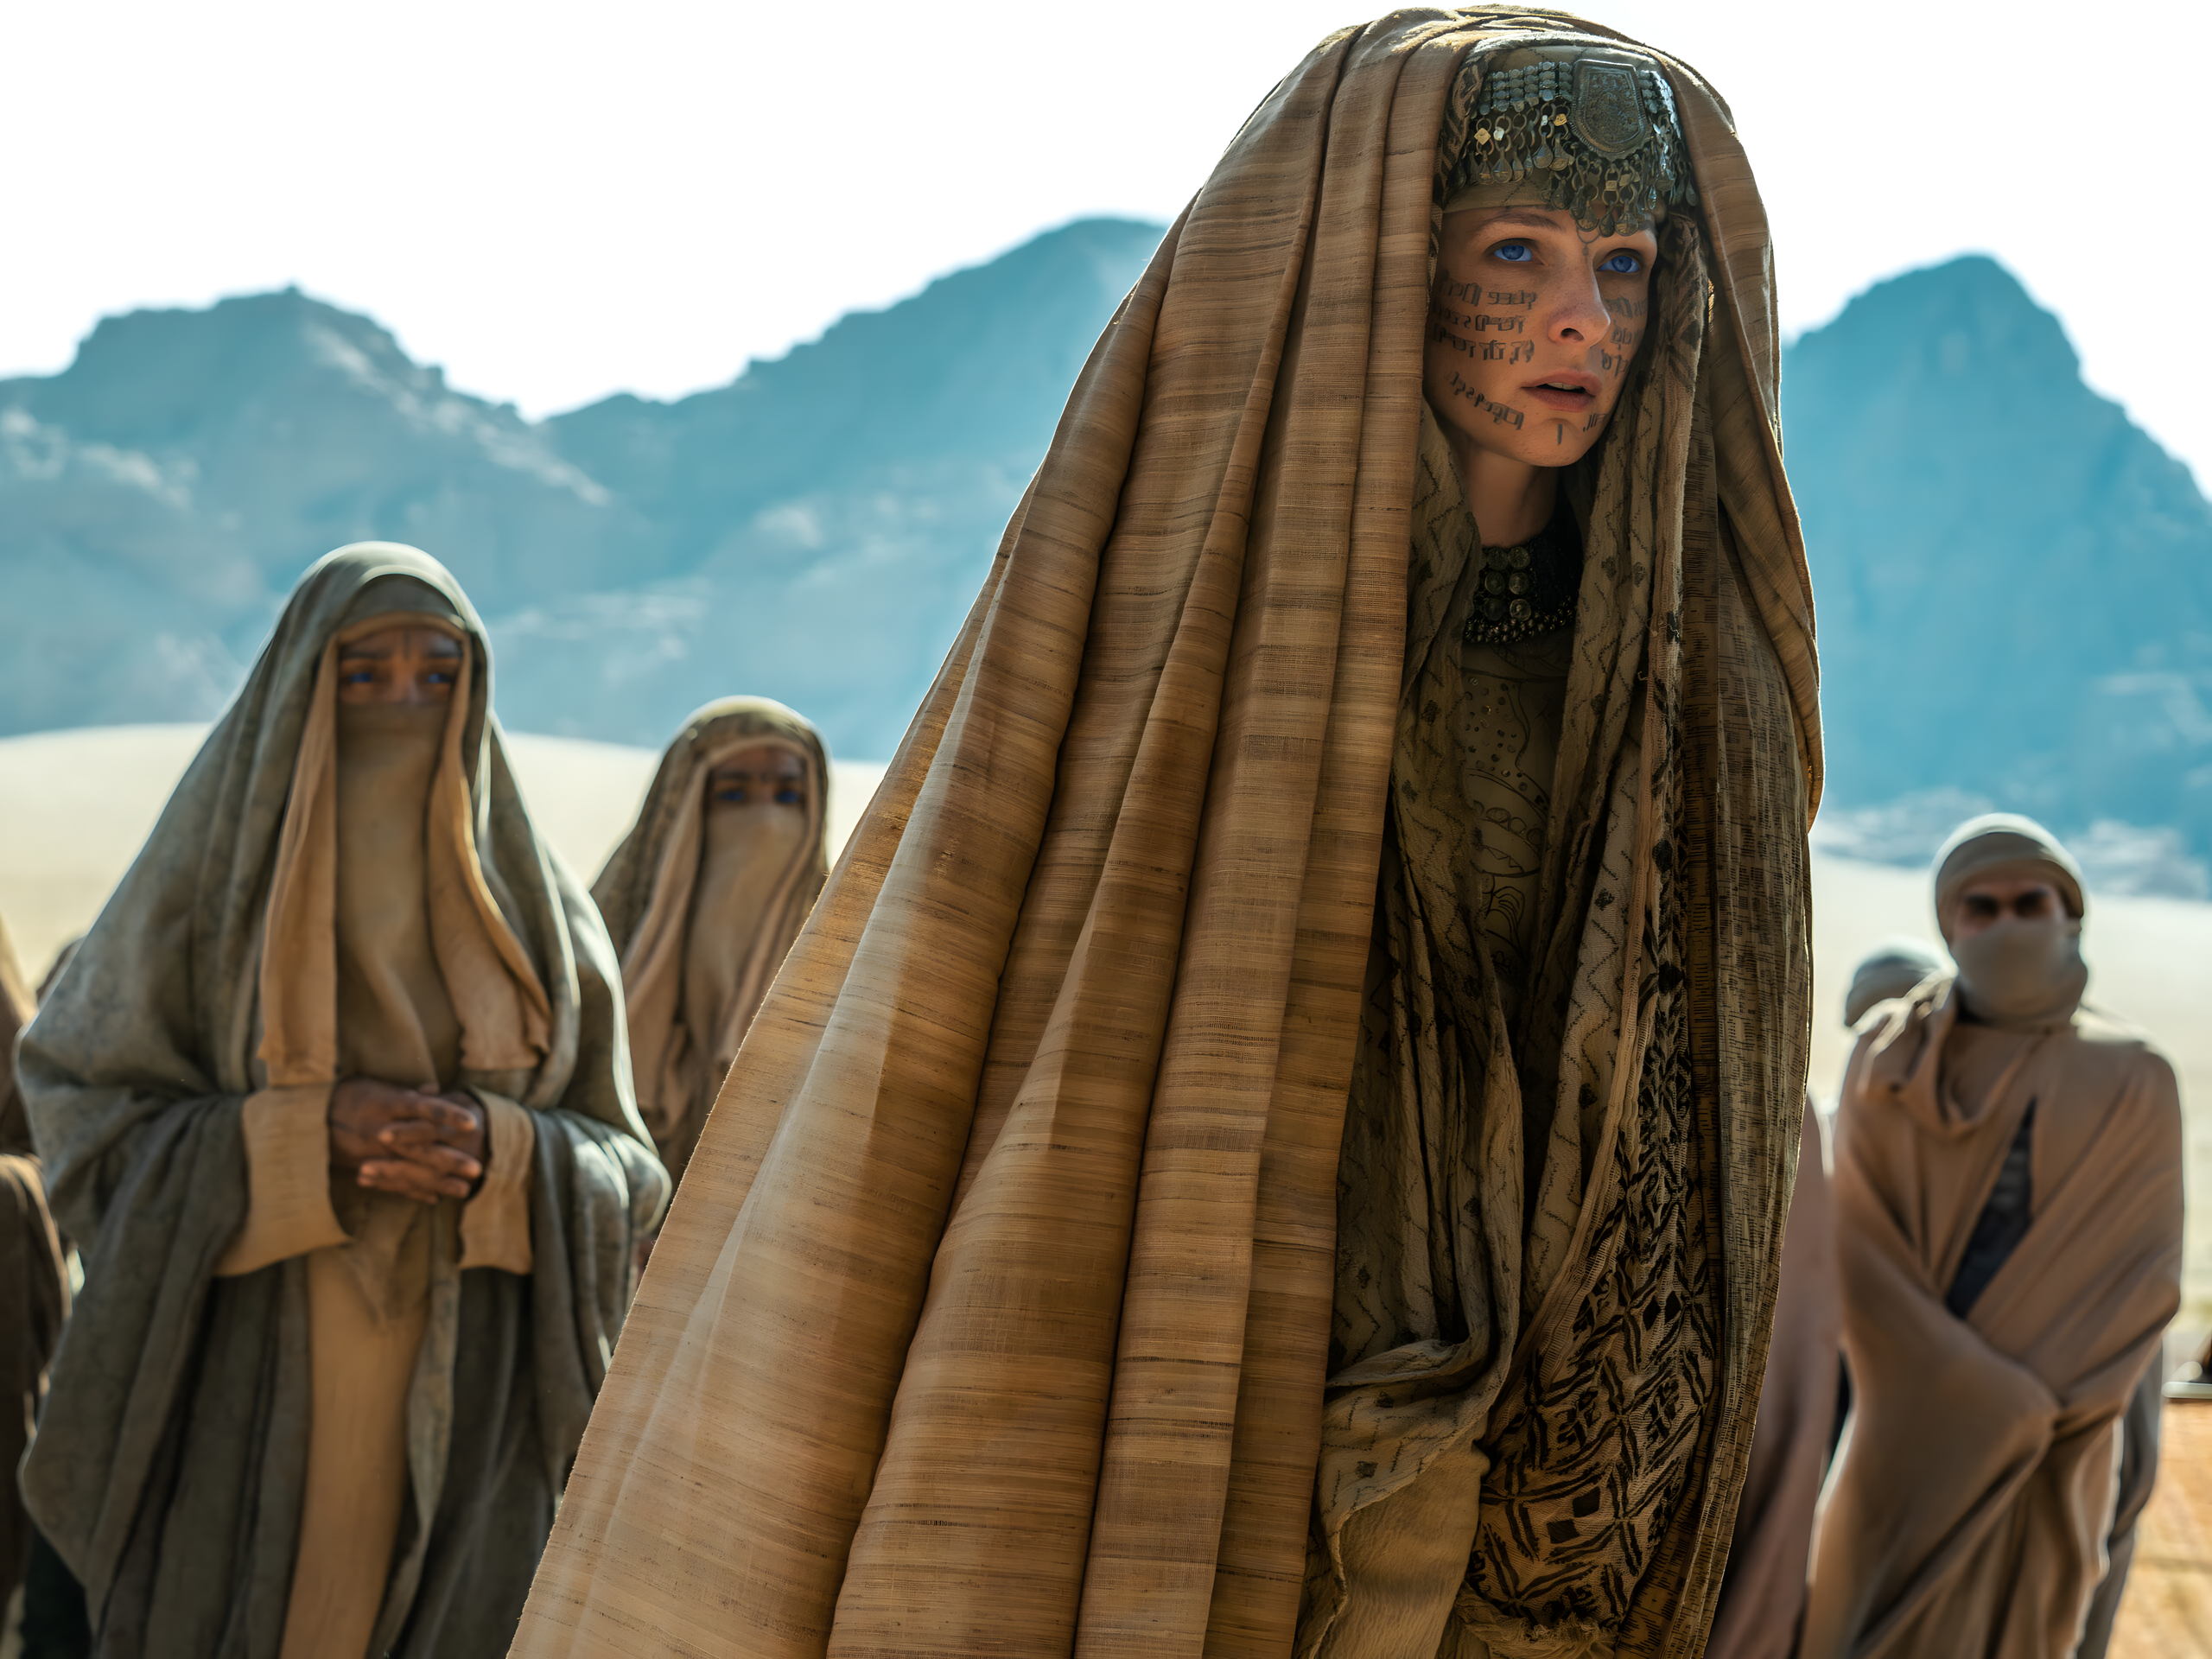 People 2560x1920 Dune (movie) Dune (series) Rebecca Ferguson desert women headscarf movies upscaled